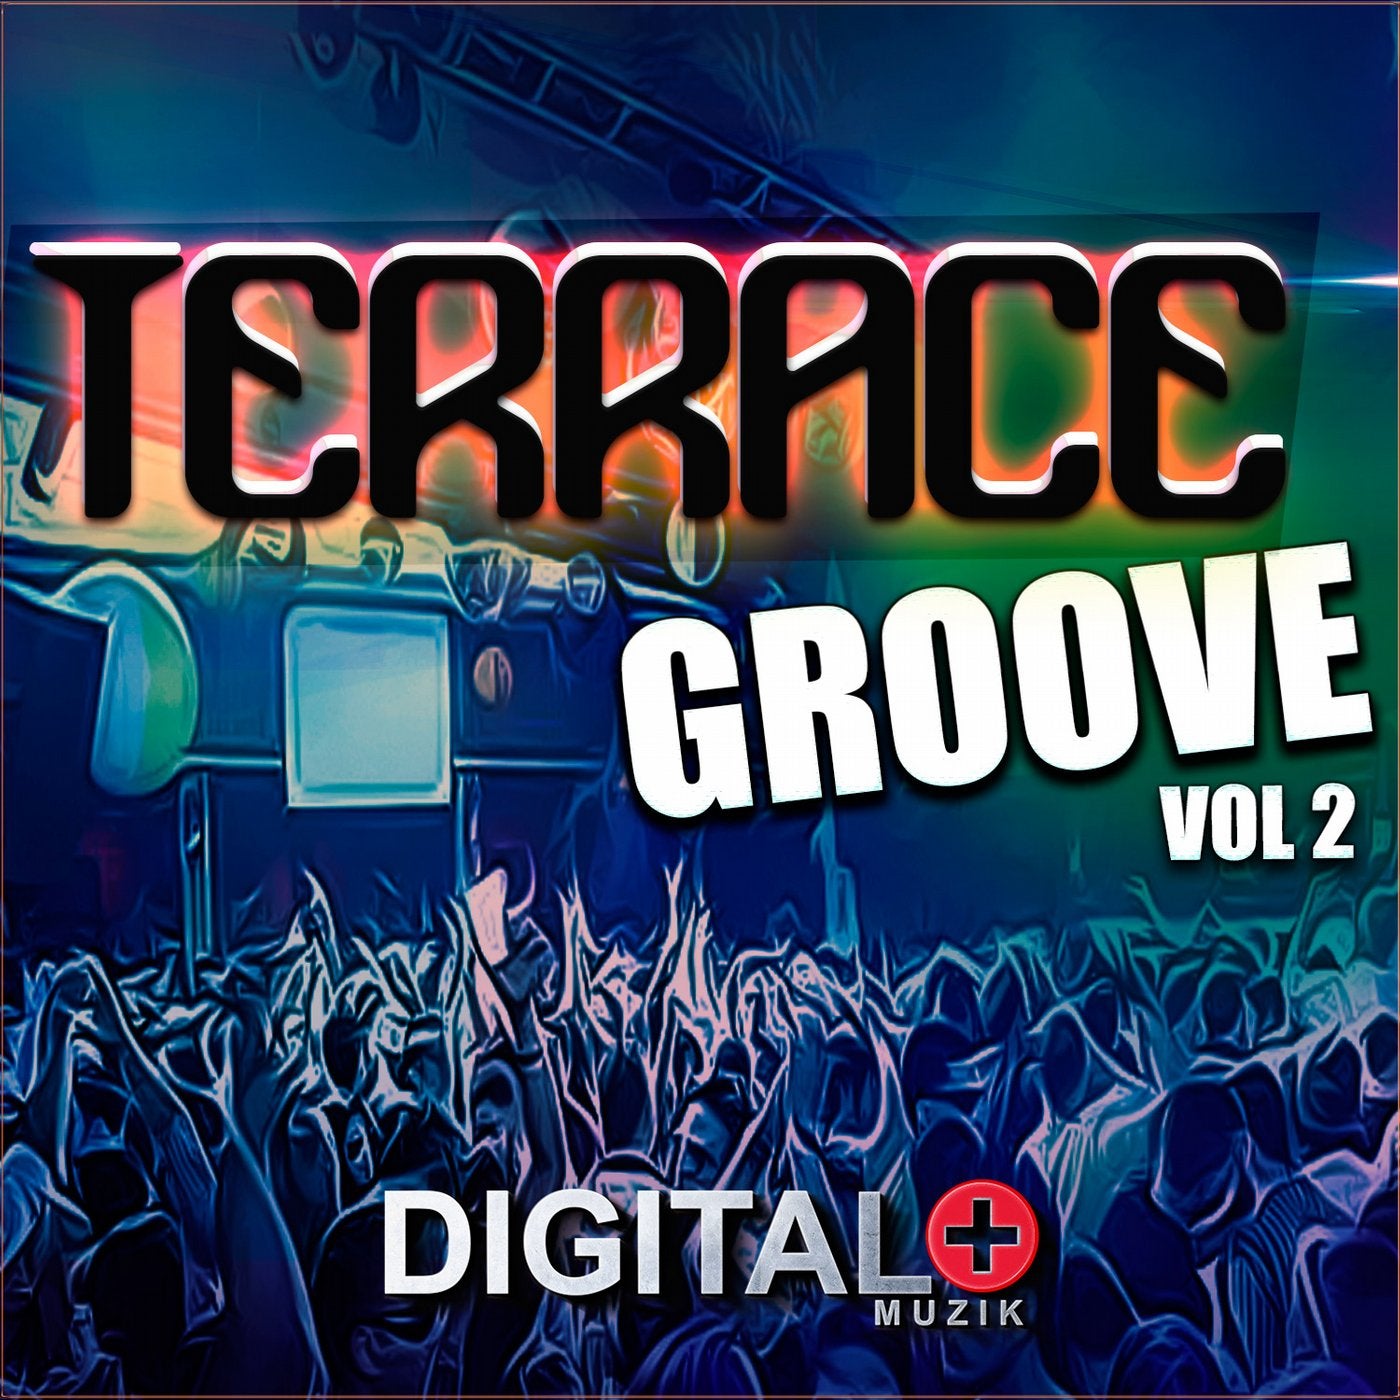 Terrace Groove Vol 2